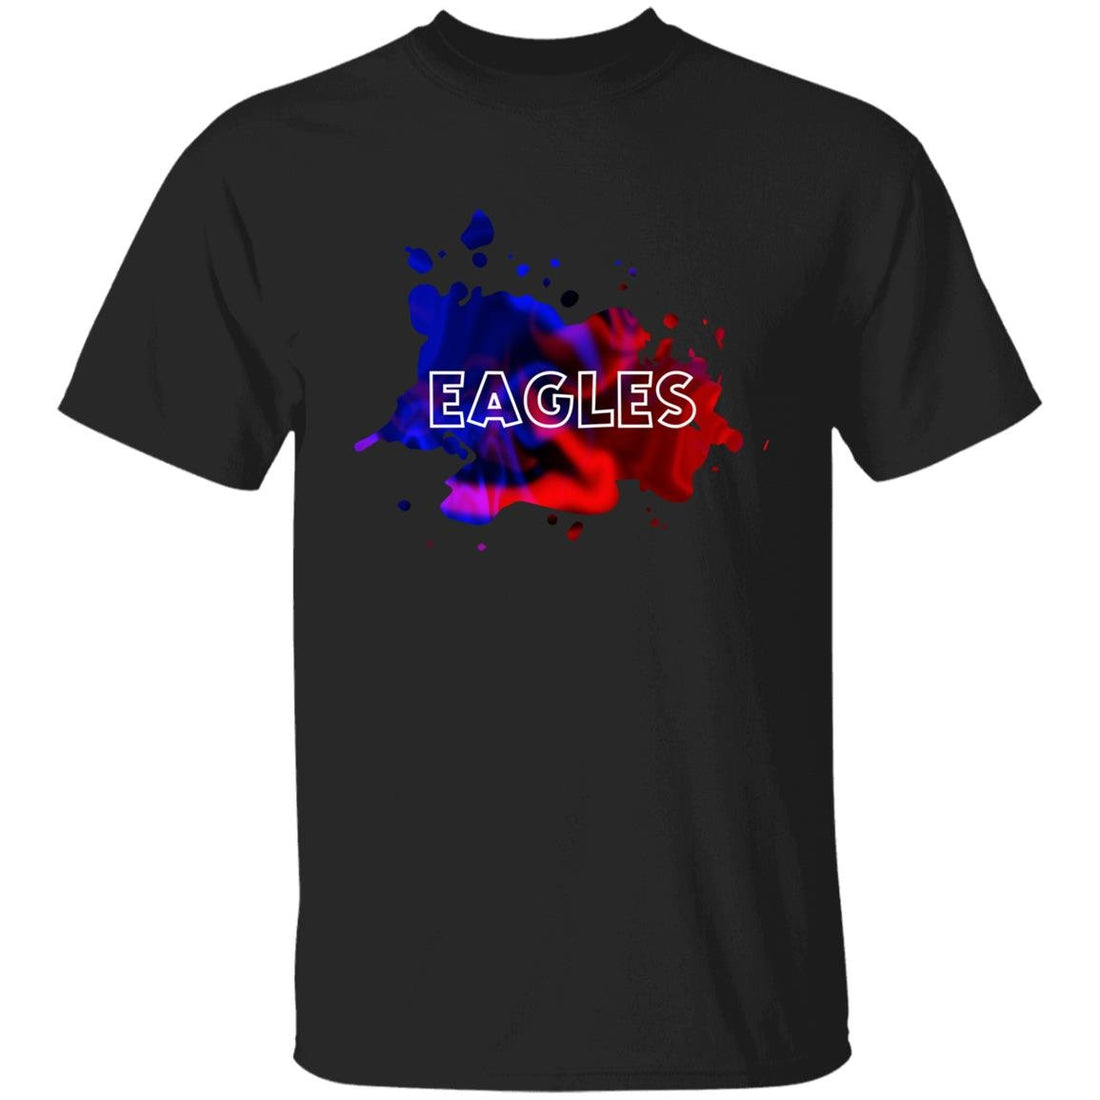 Eagles Splash Youth T-Shirt - T-Shirts - Positively Sassy - Eagles Splash Youth T-Shirt